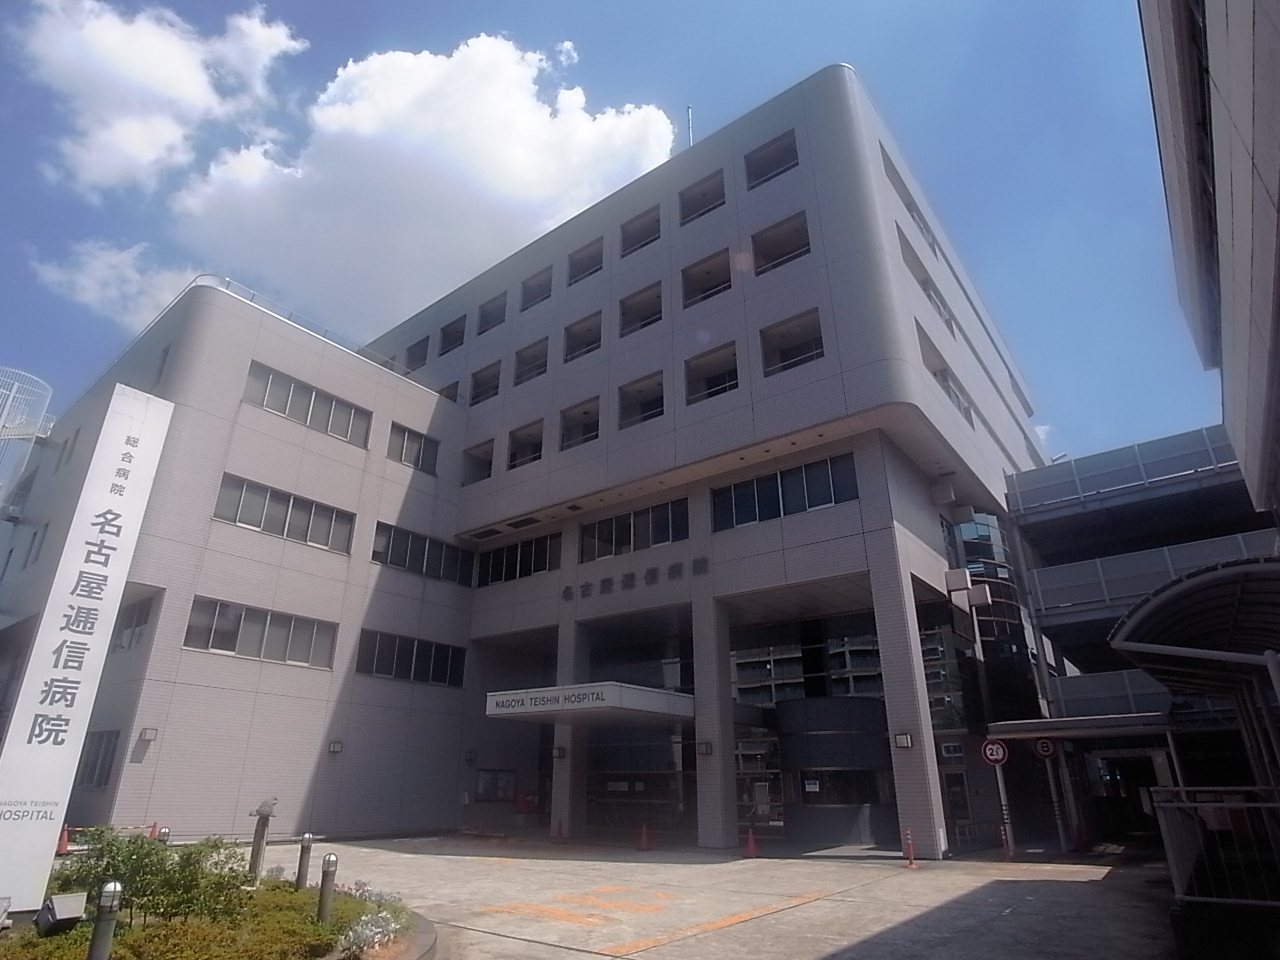 Hospital. 106m to Nagoya the Communications Hospital (General Hospital) (hospital)